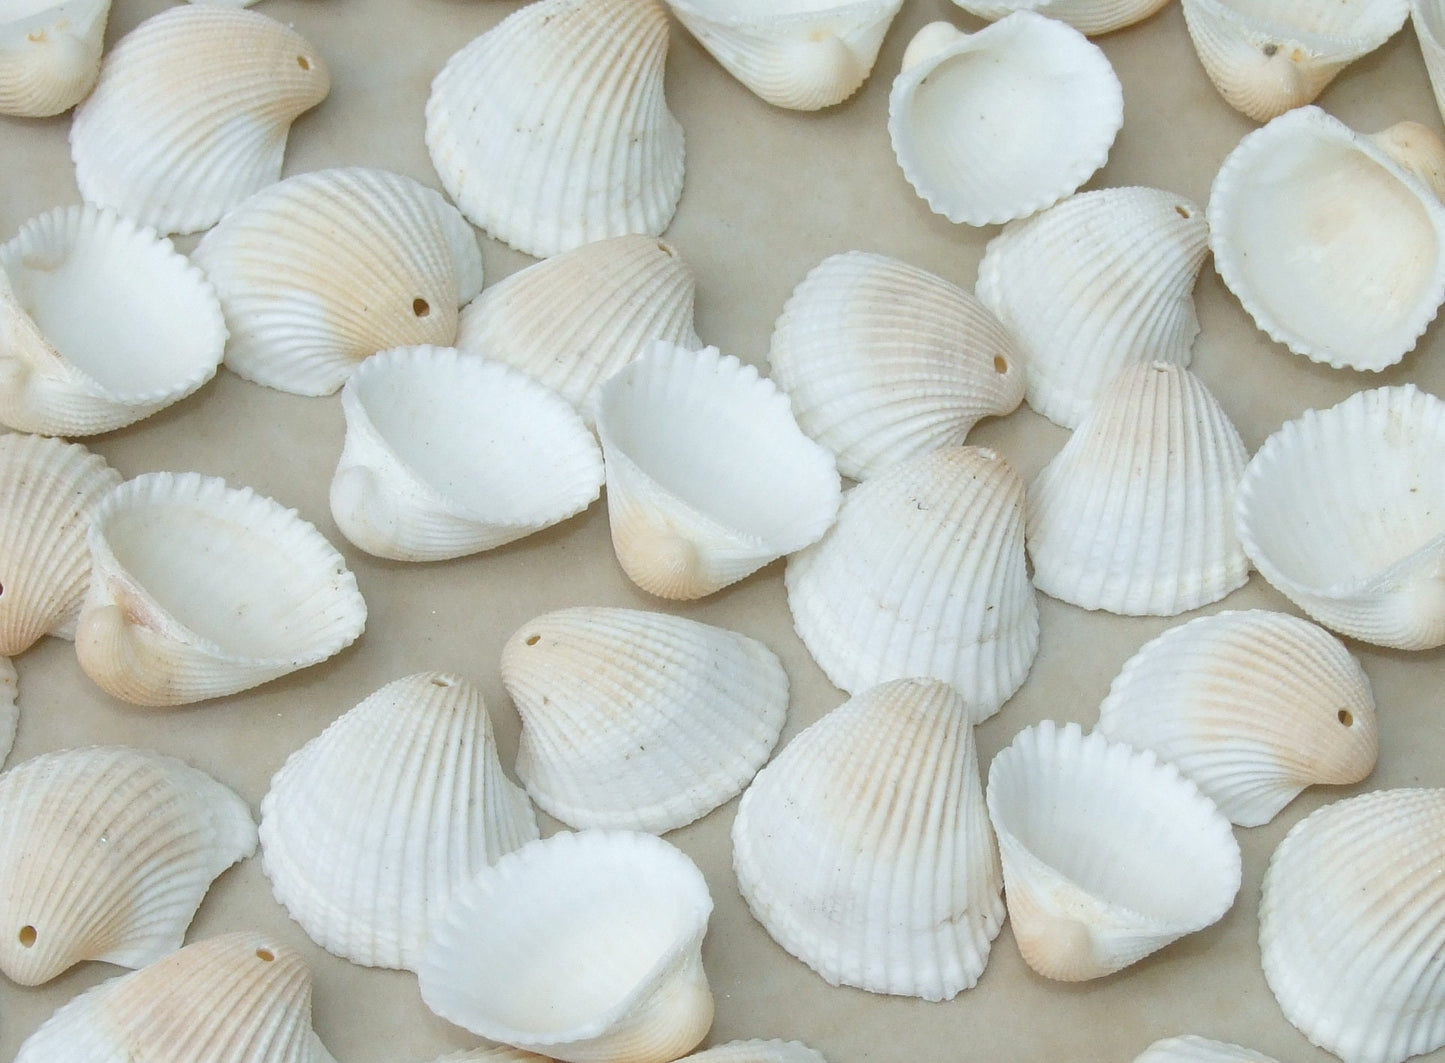 20 Natural Clam Sea Shell, Sea Shell Bead, Seashell, Ark Shell, Ribbed, Dinocardium Robustum, Shell Jewelry, Beach, Ocean, 20 Shells, 51-14